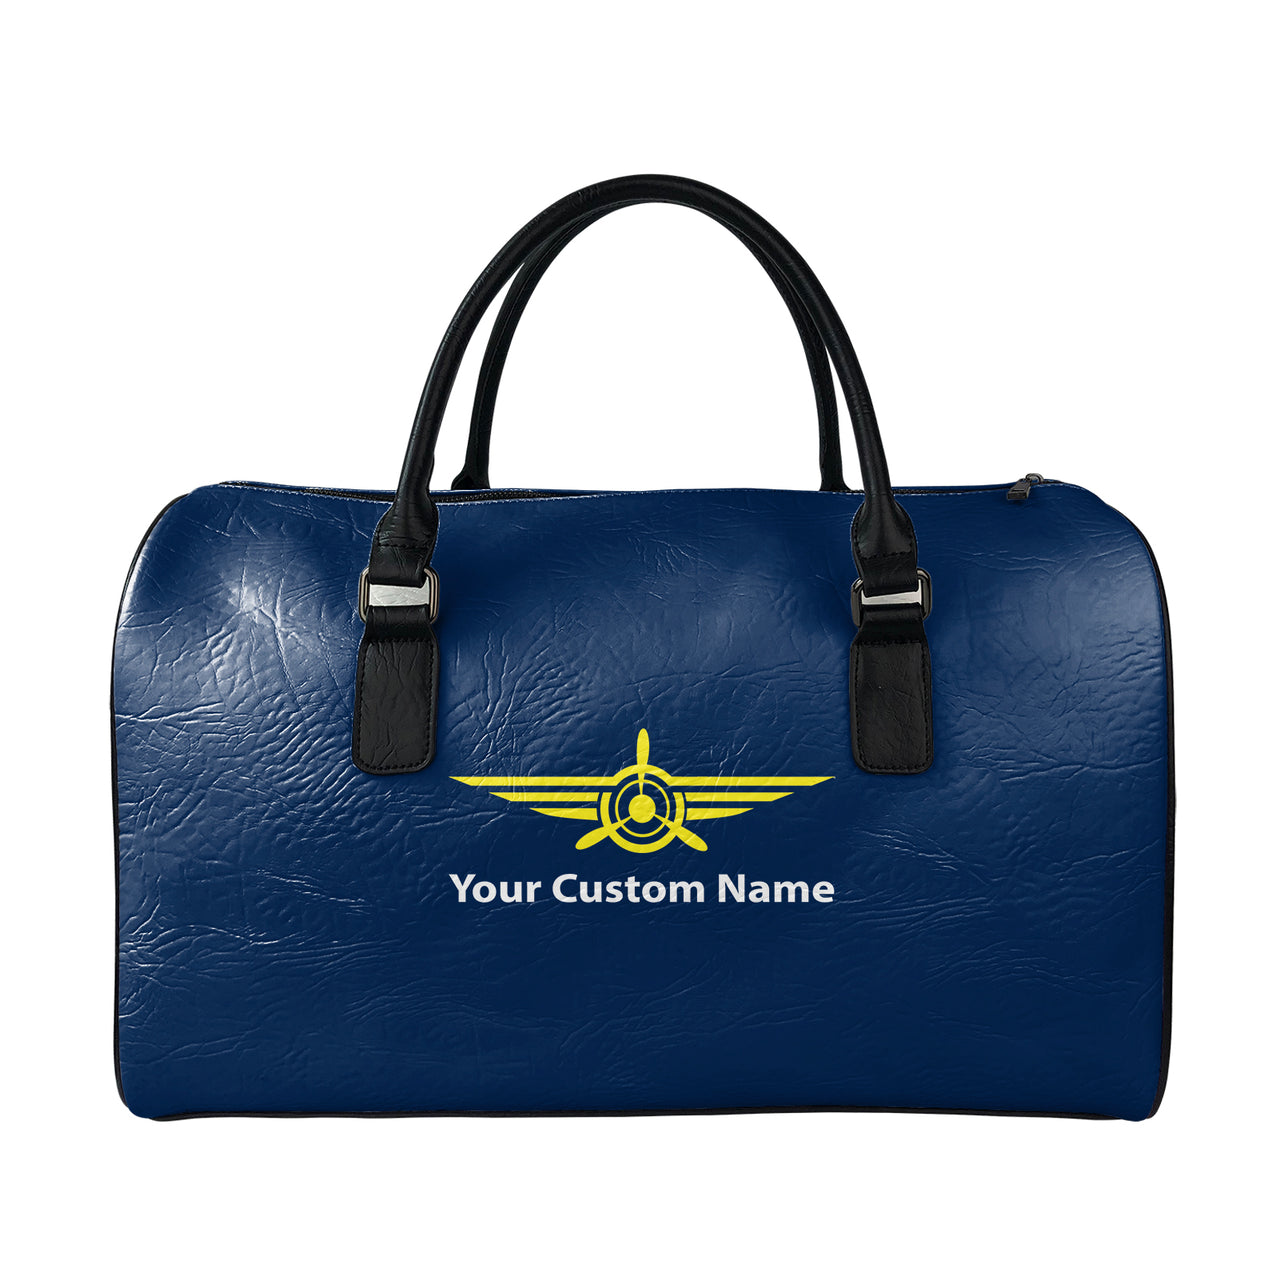 Custom Name (Badge 3) Designed Leather Travel Bag